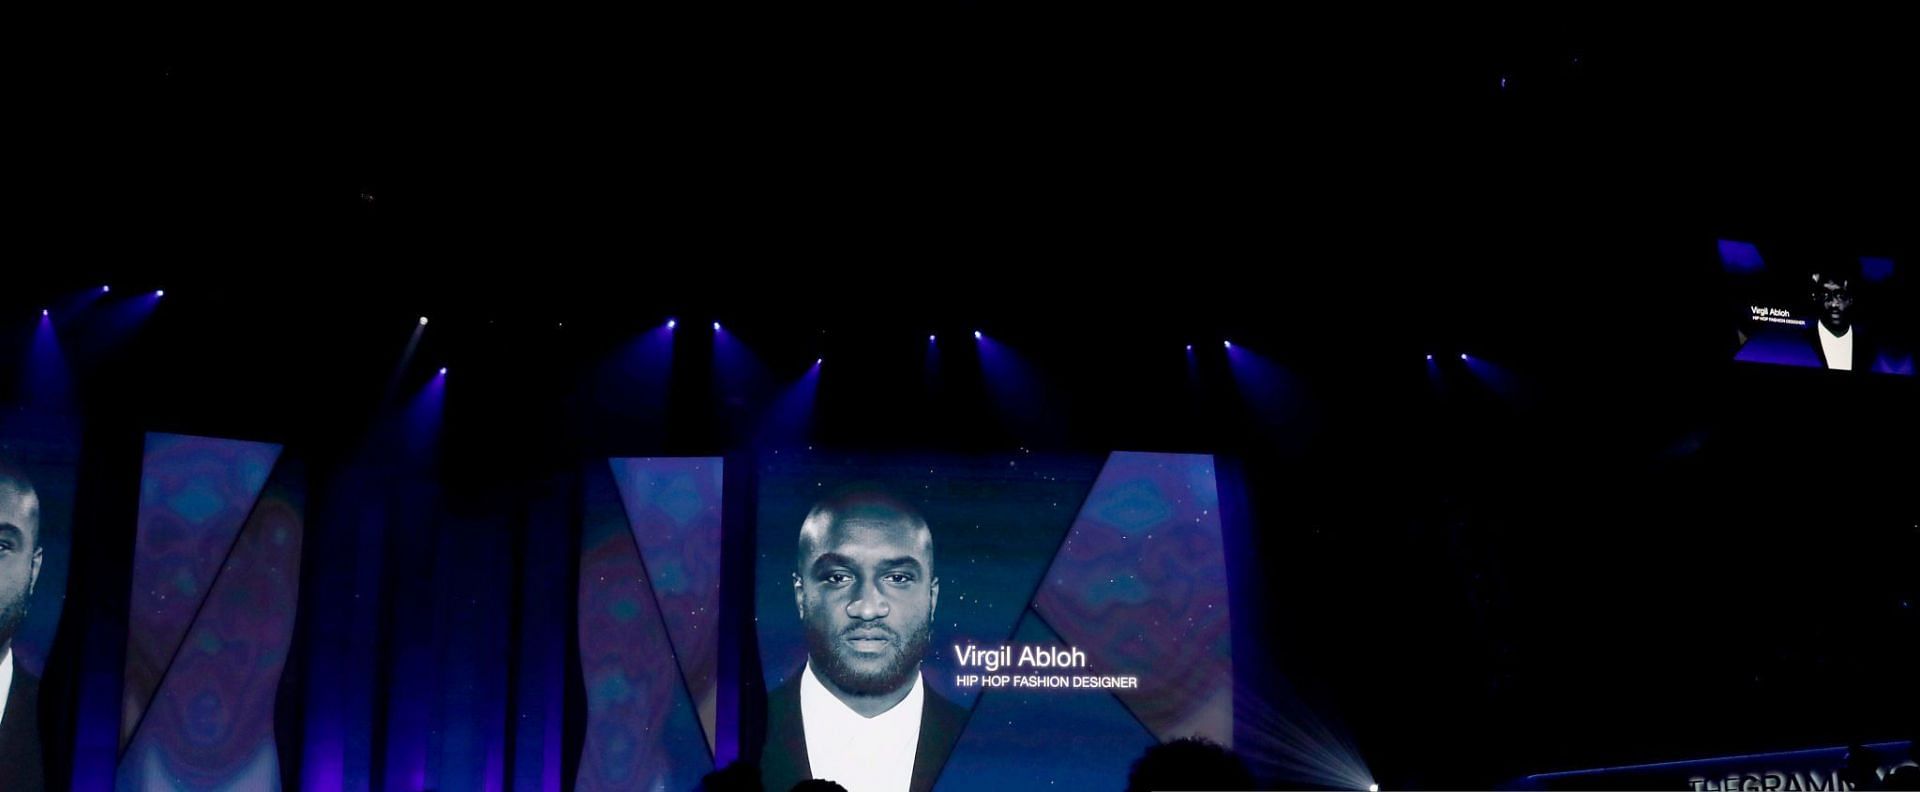 Grammy Awards criticised for describing Virgil Abloh as 'hip-hop